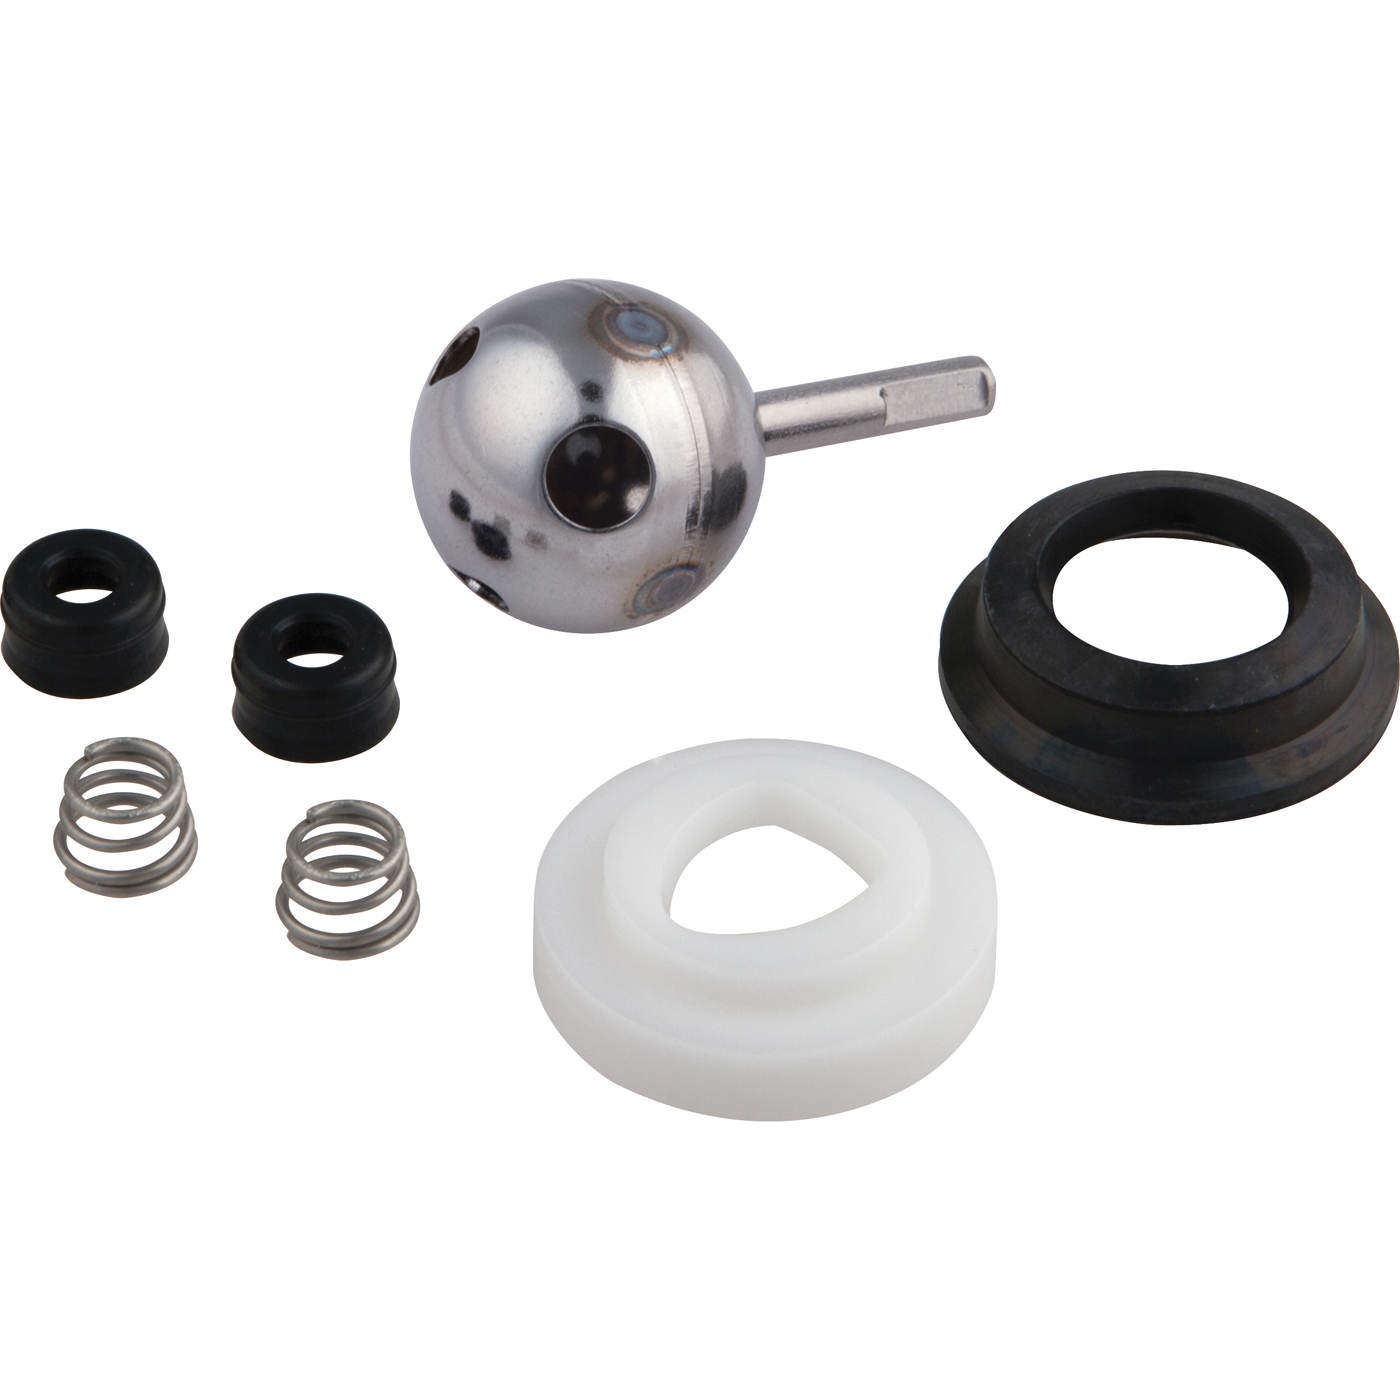 Globe Union Faucet Ball Valve Repair Kit Master Plumber